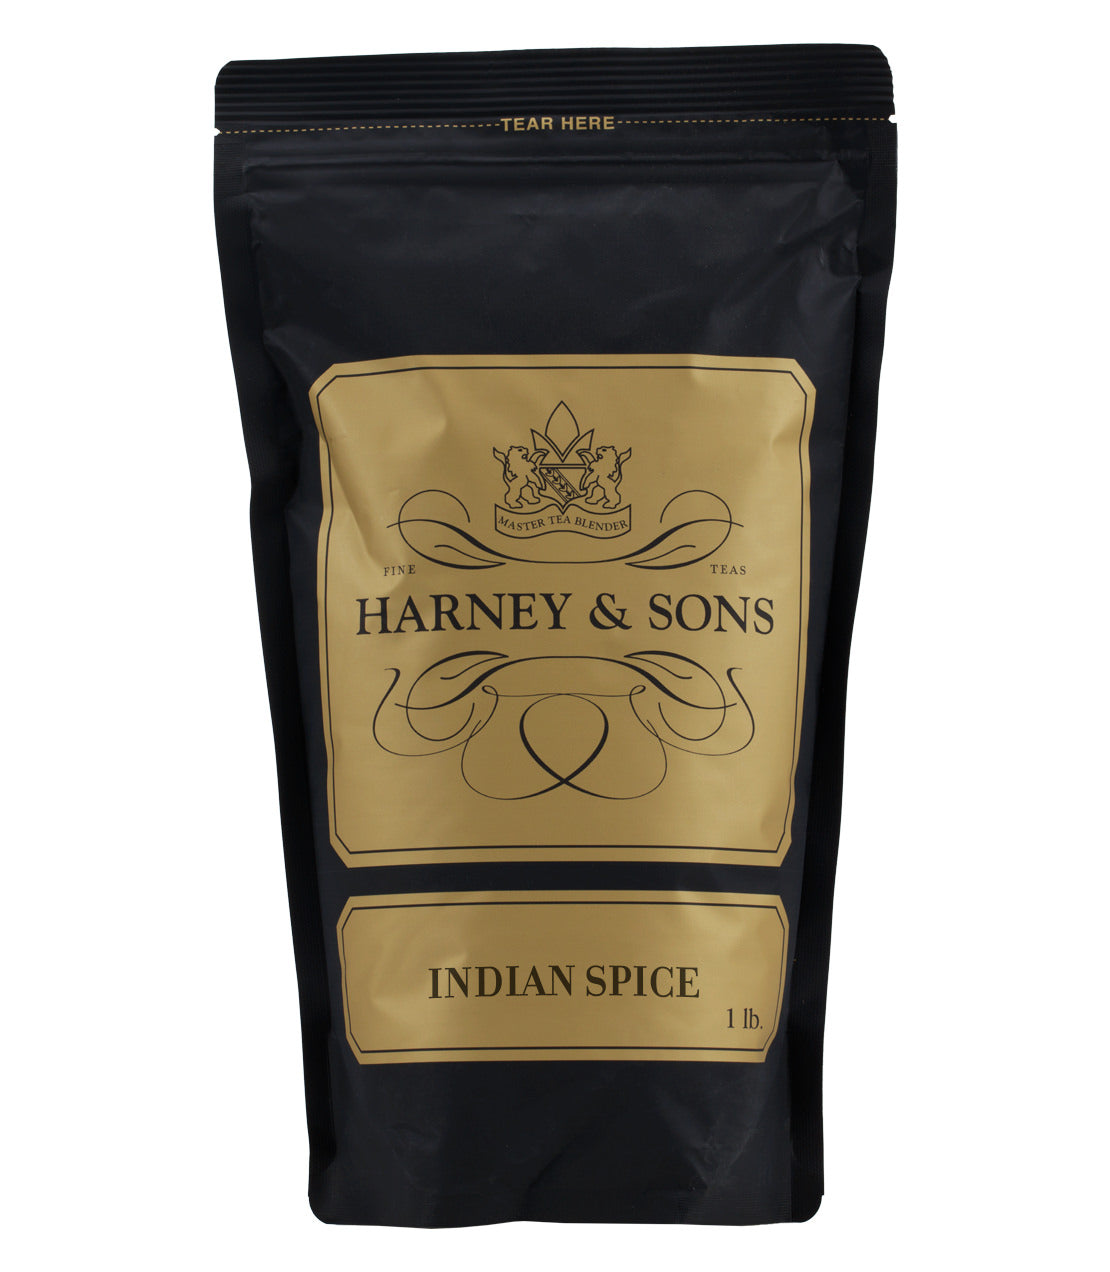 Indian Spice - Loose 1 lb. Bag - Harney & Sons Fine Teas